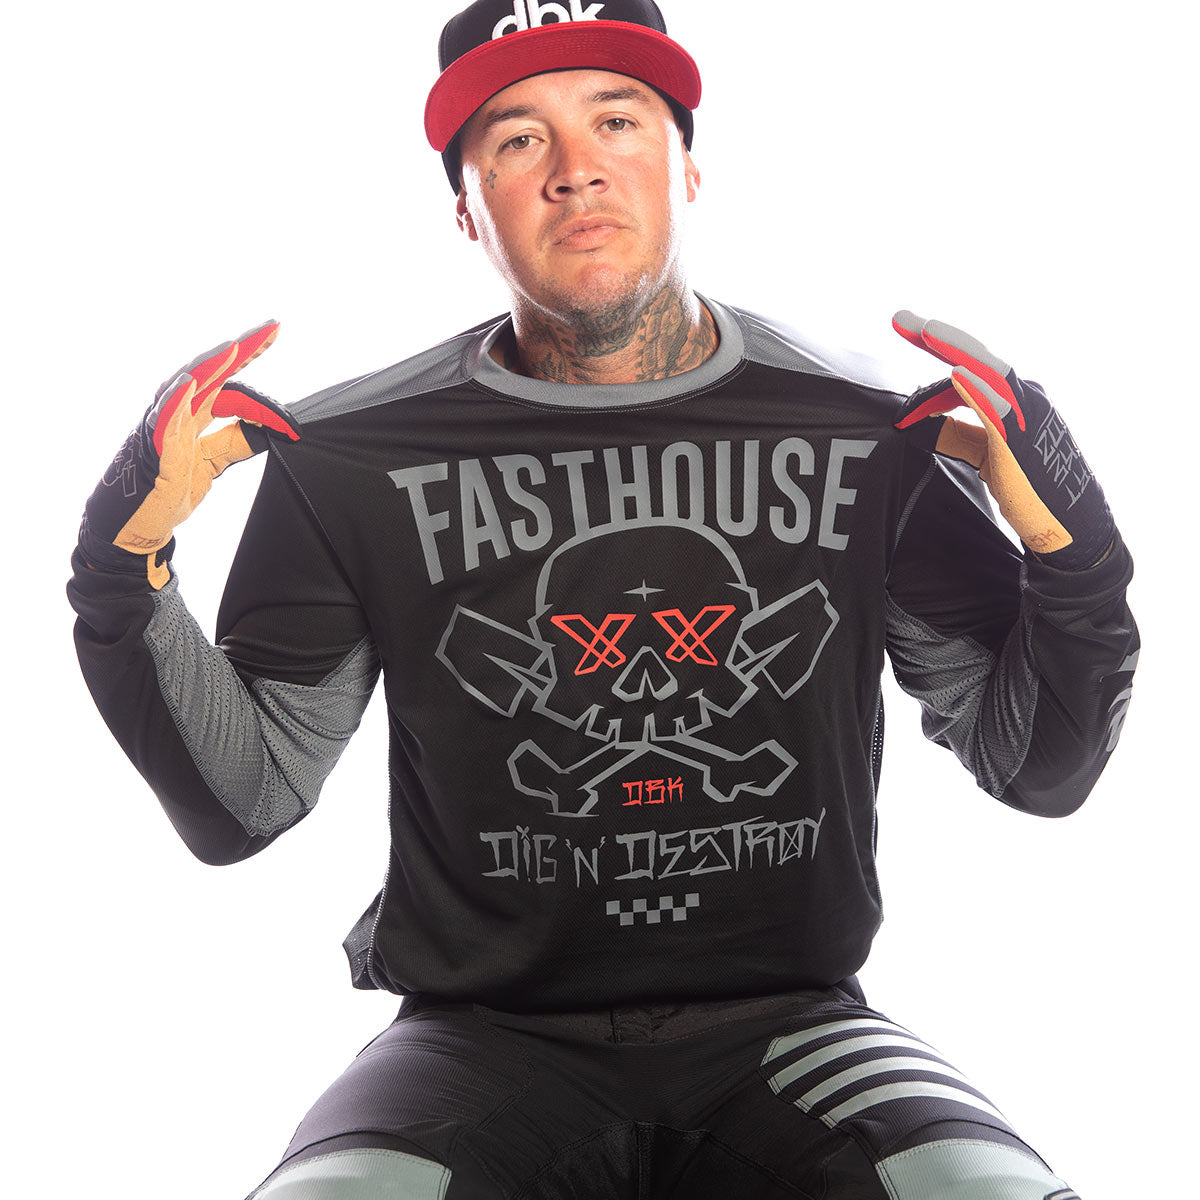 fasthouse custom jersey